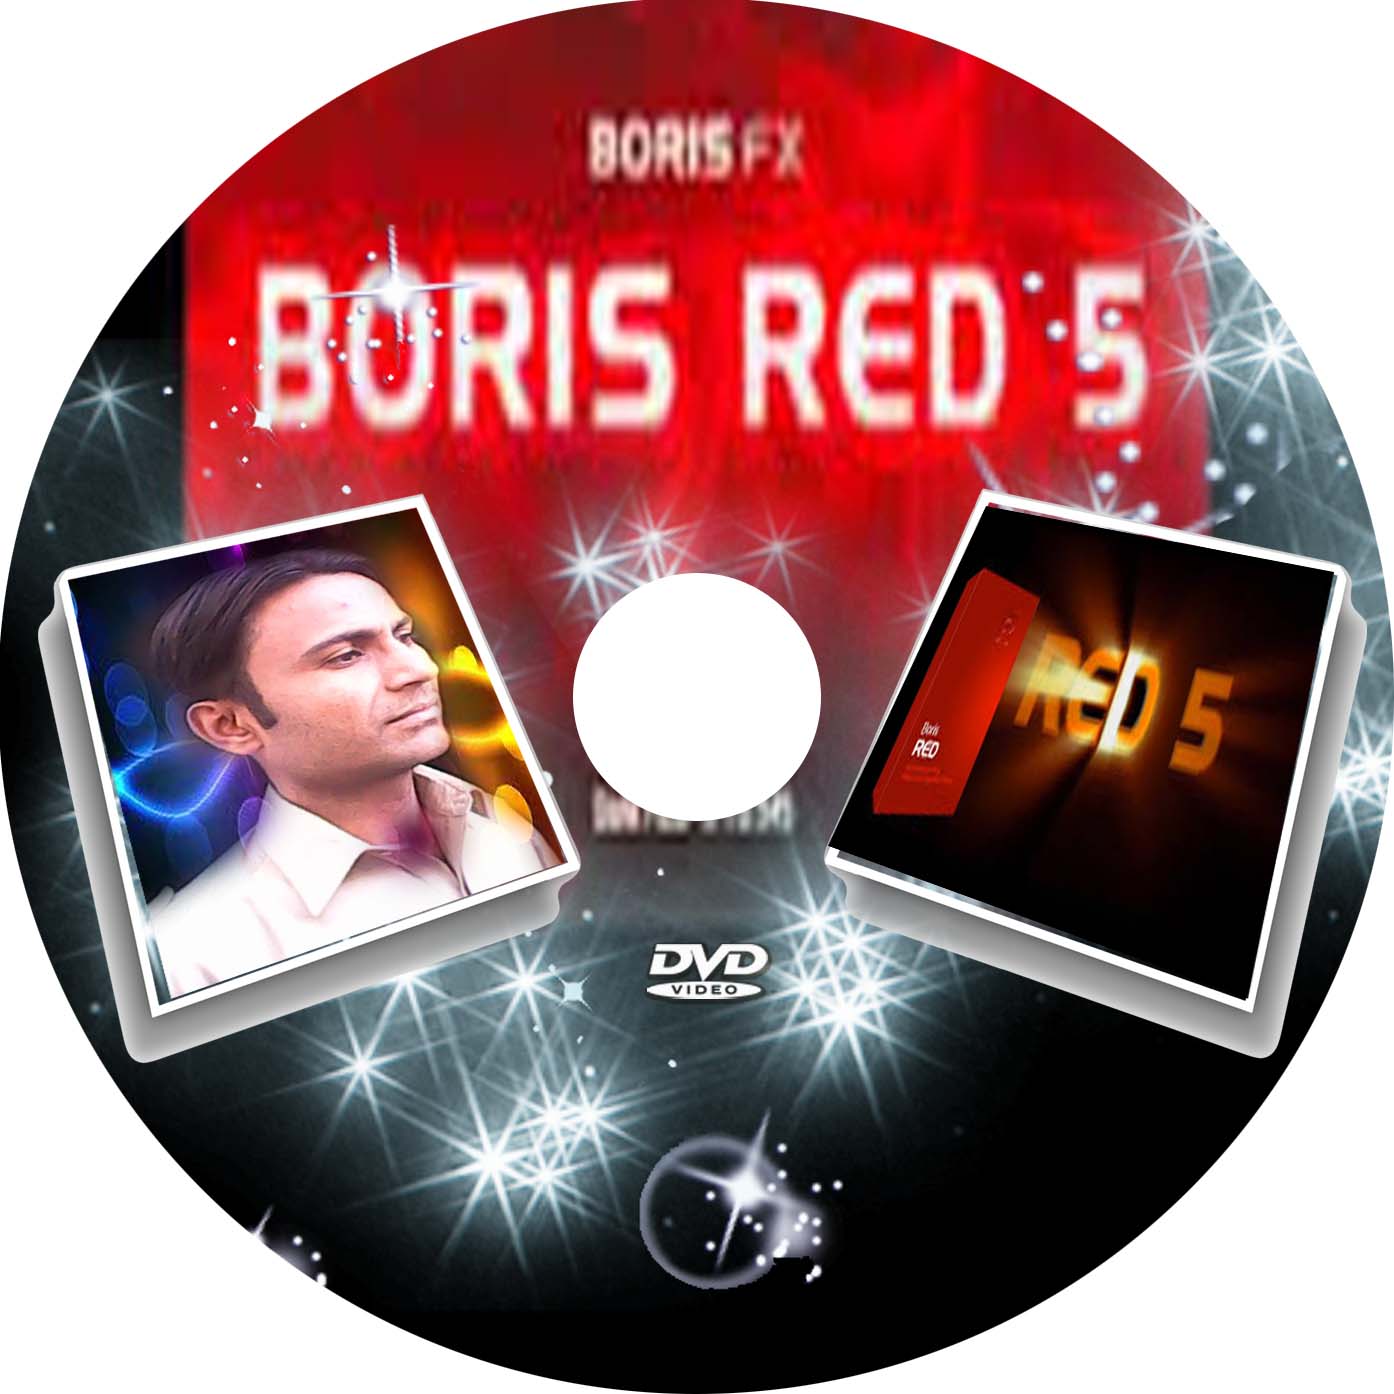 boris fx vs red giant